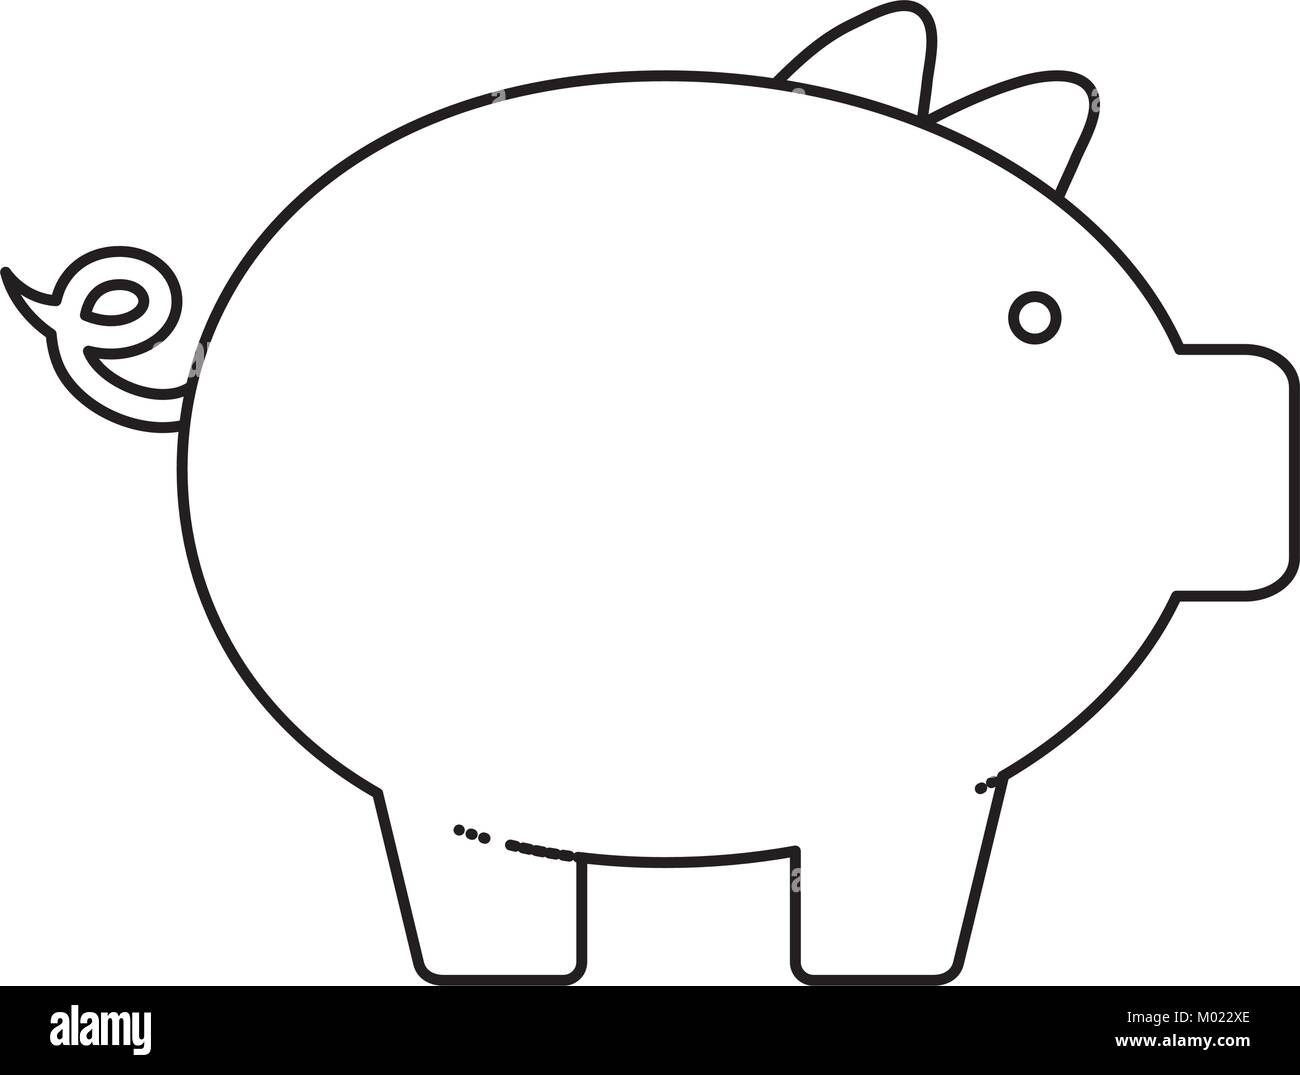 piggybank vector illustration Stock Vector